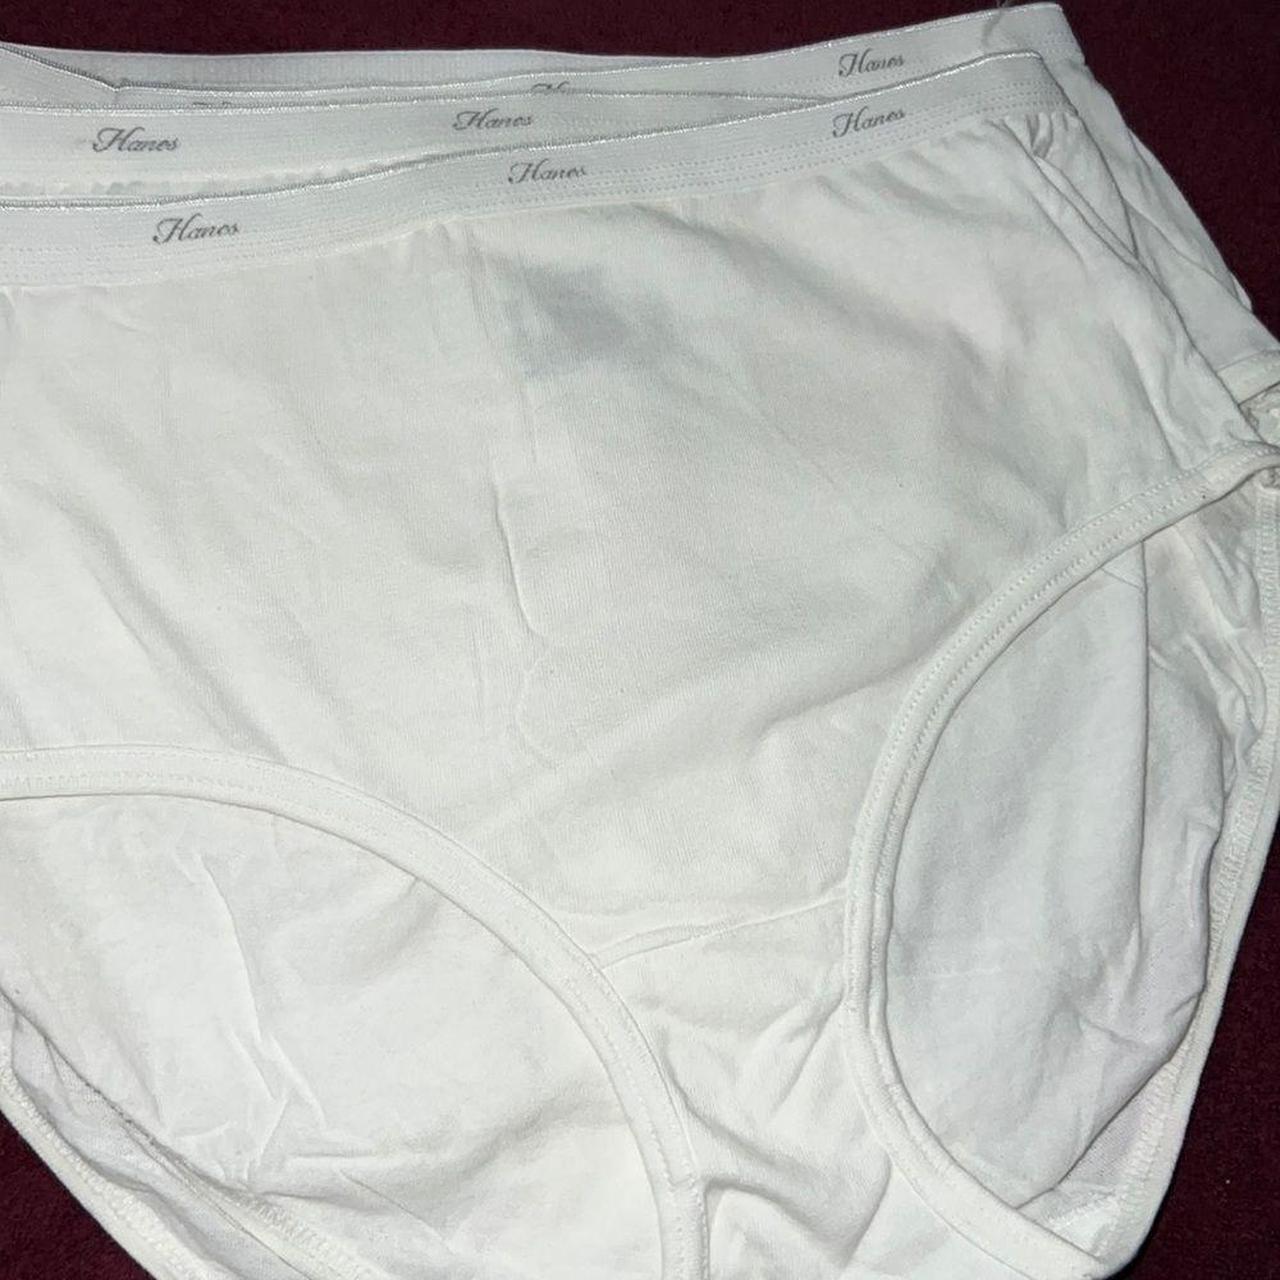 Full Coverage Panty - White / Cotton